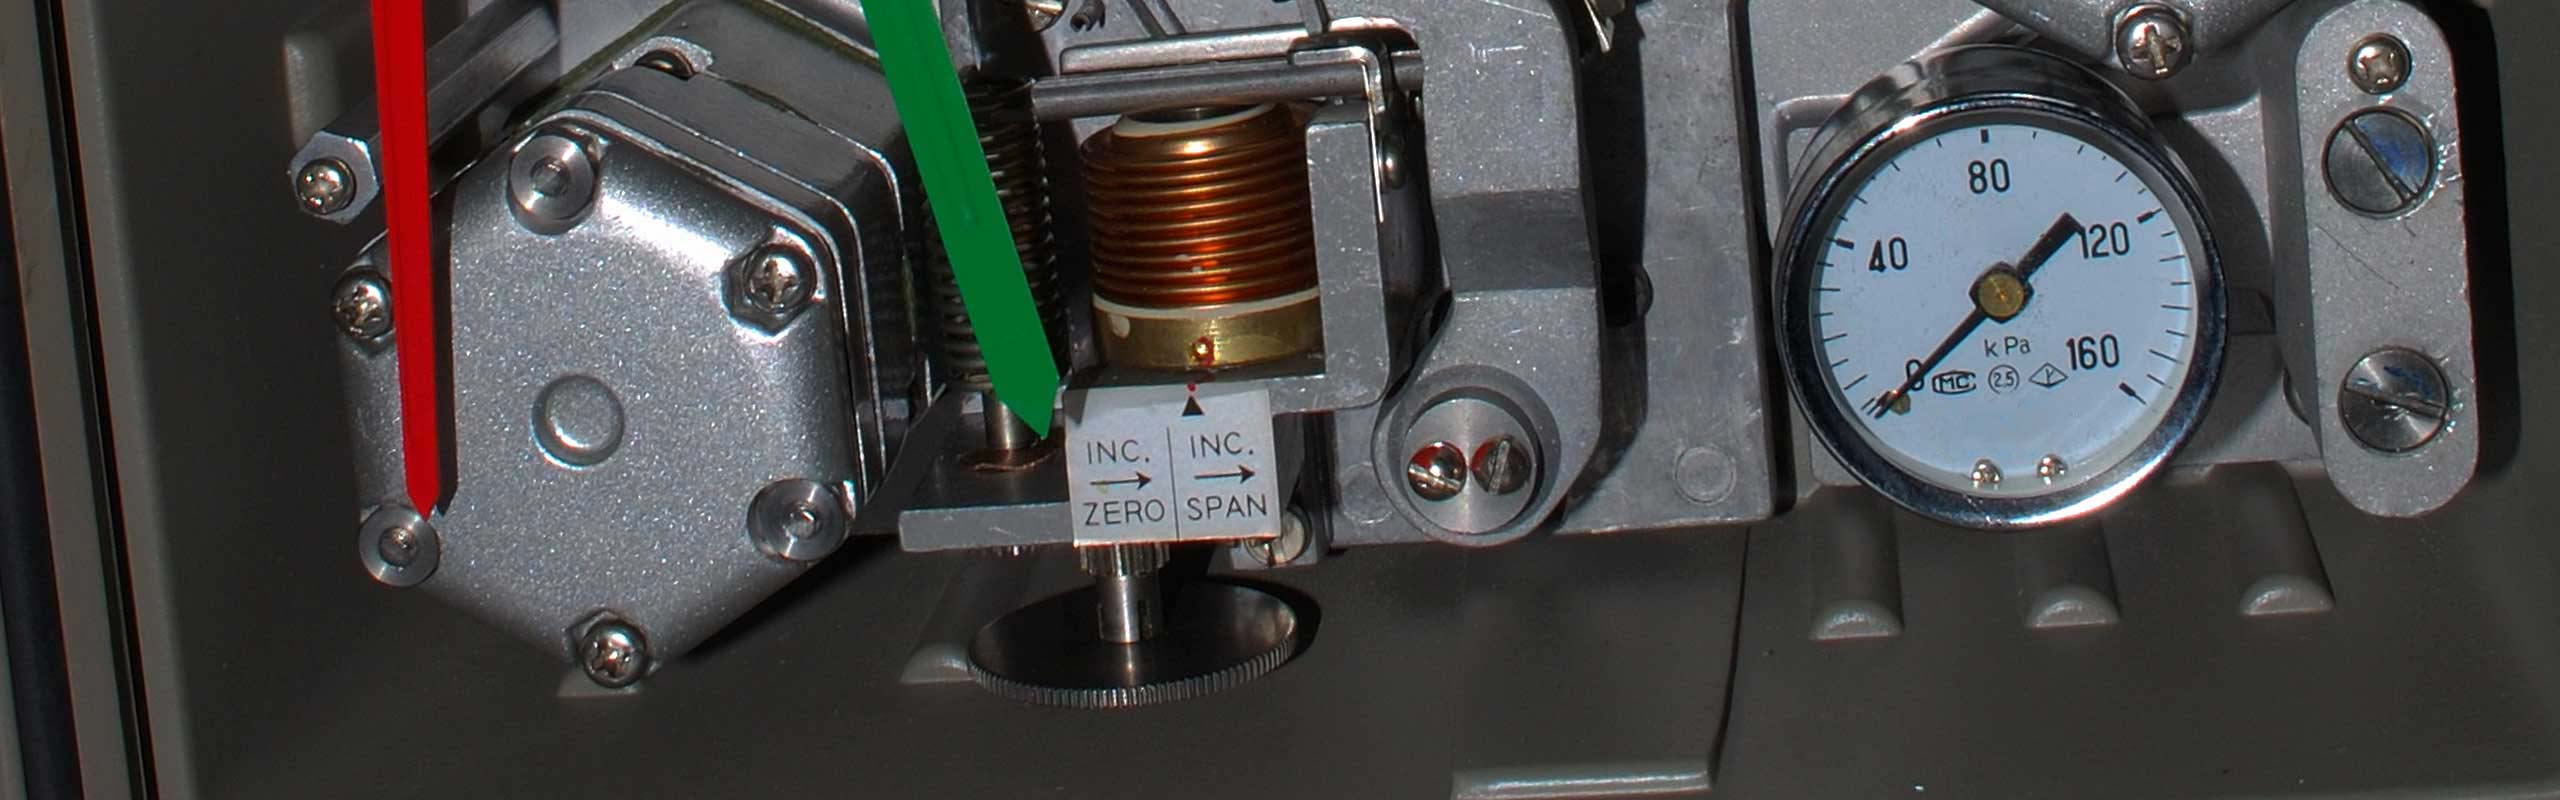 KFK (Adjustable Range Type) Pressure Indicating Controller